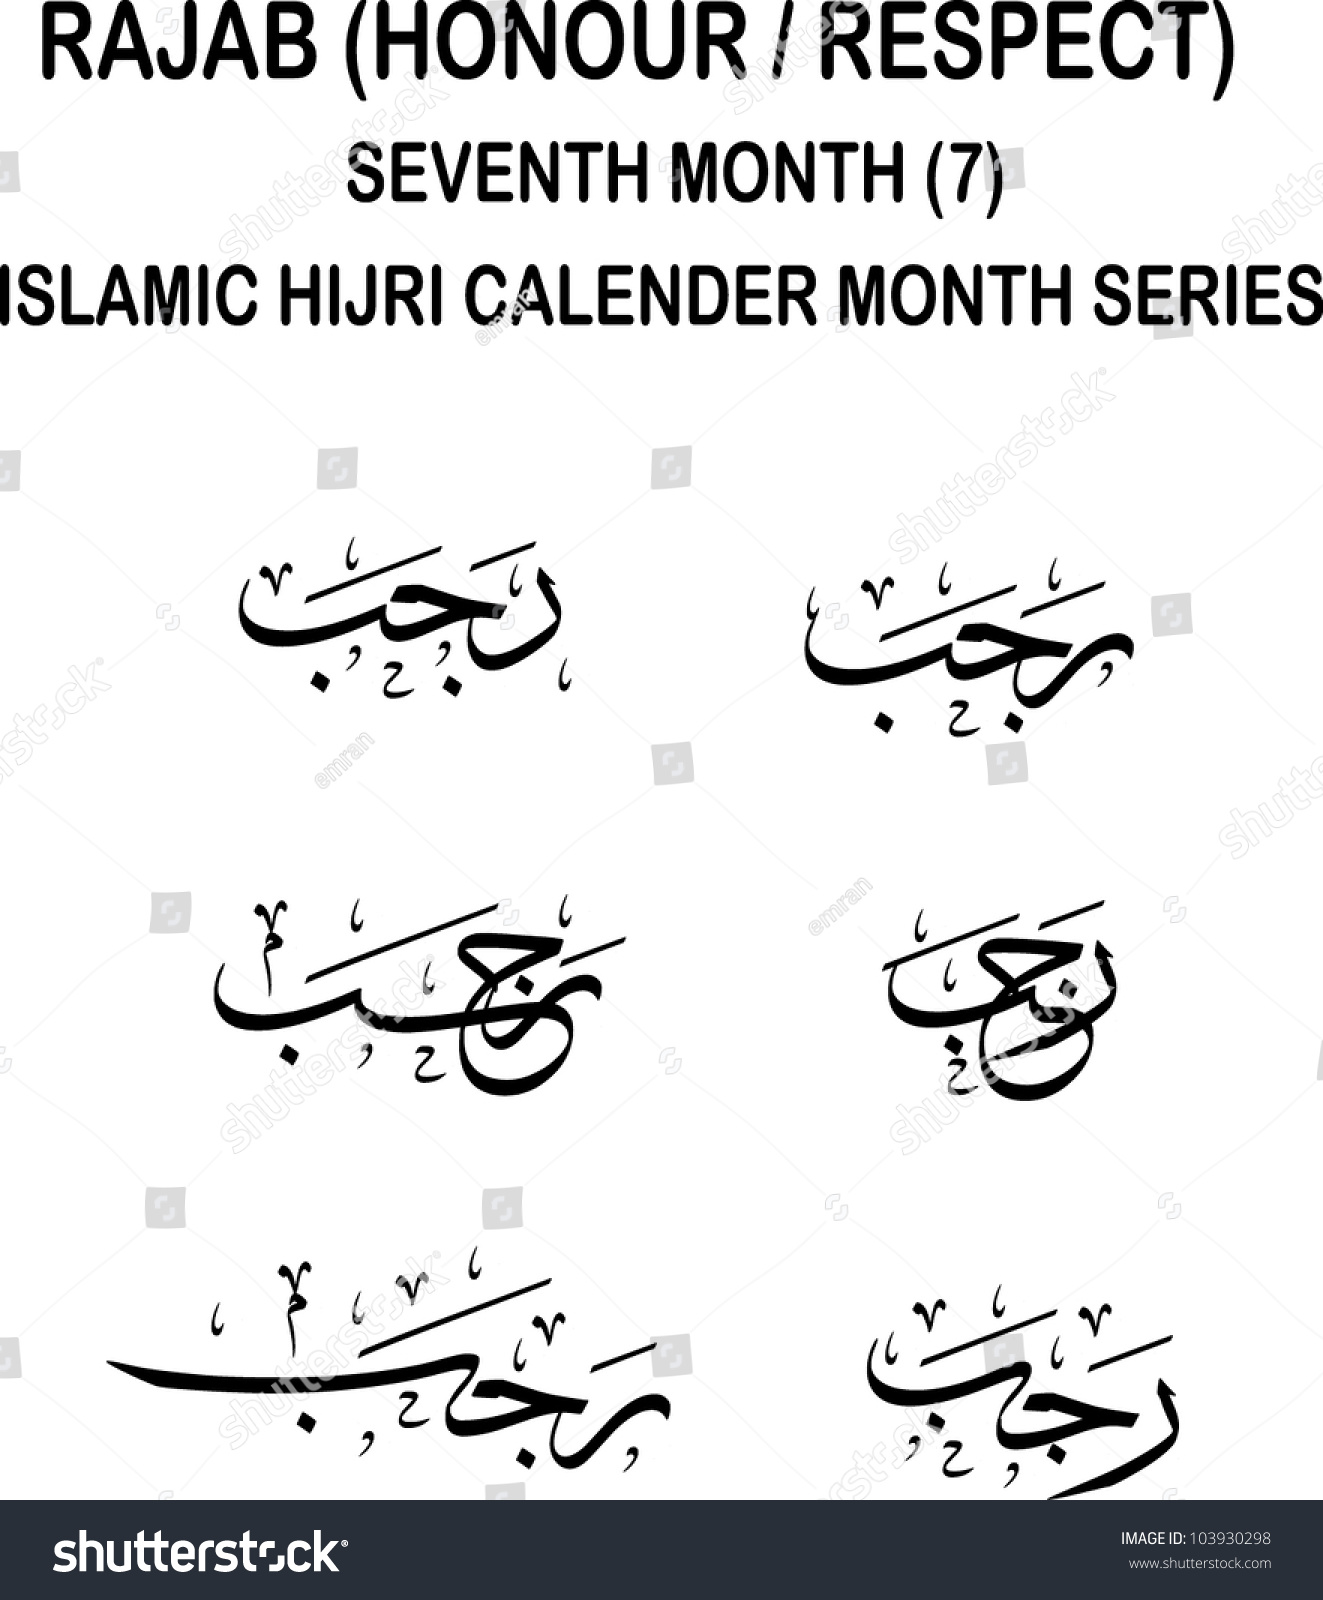 Six Variations Of Rajab Rejab The Seventh Month In Lunar Based